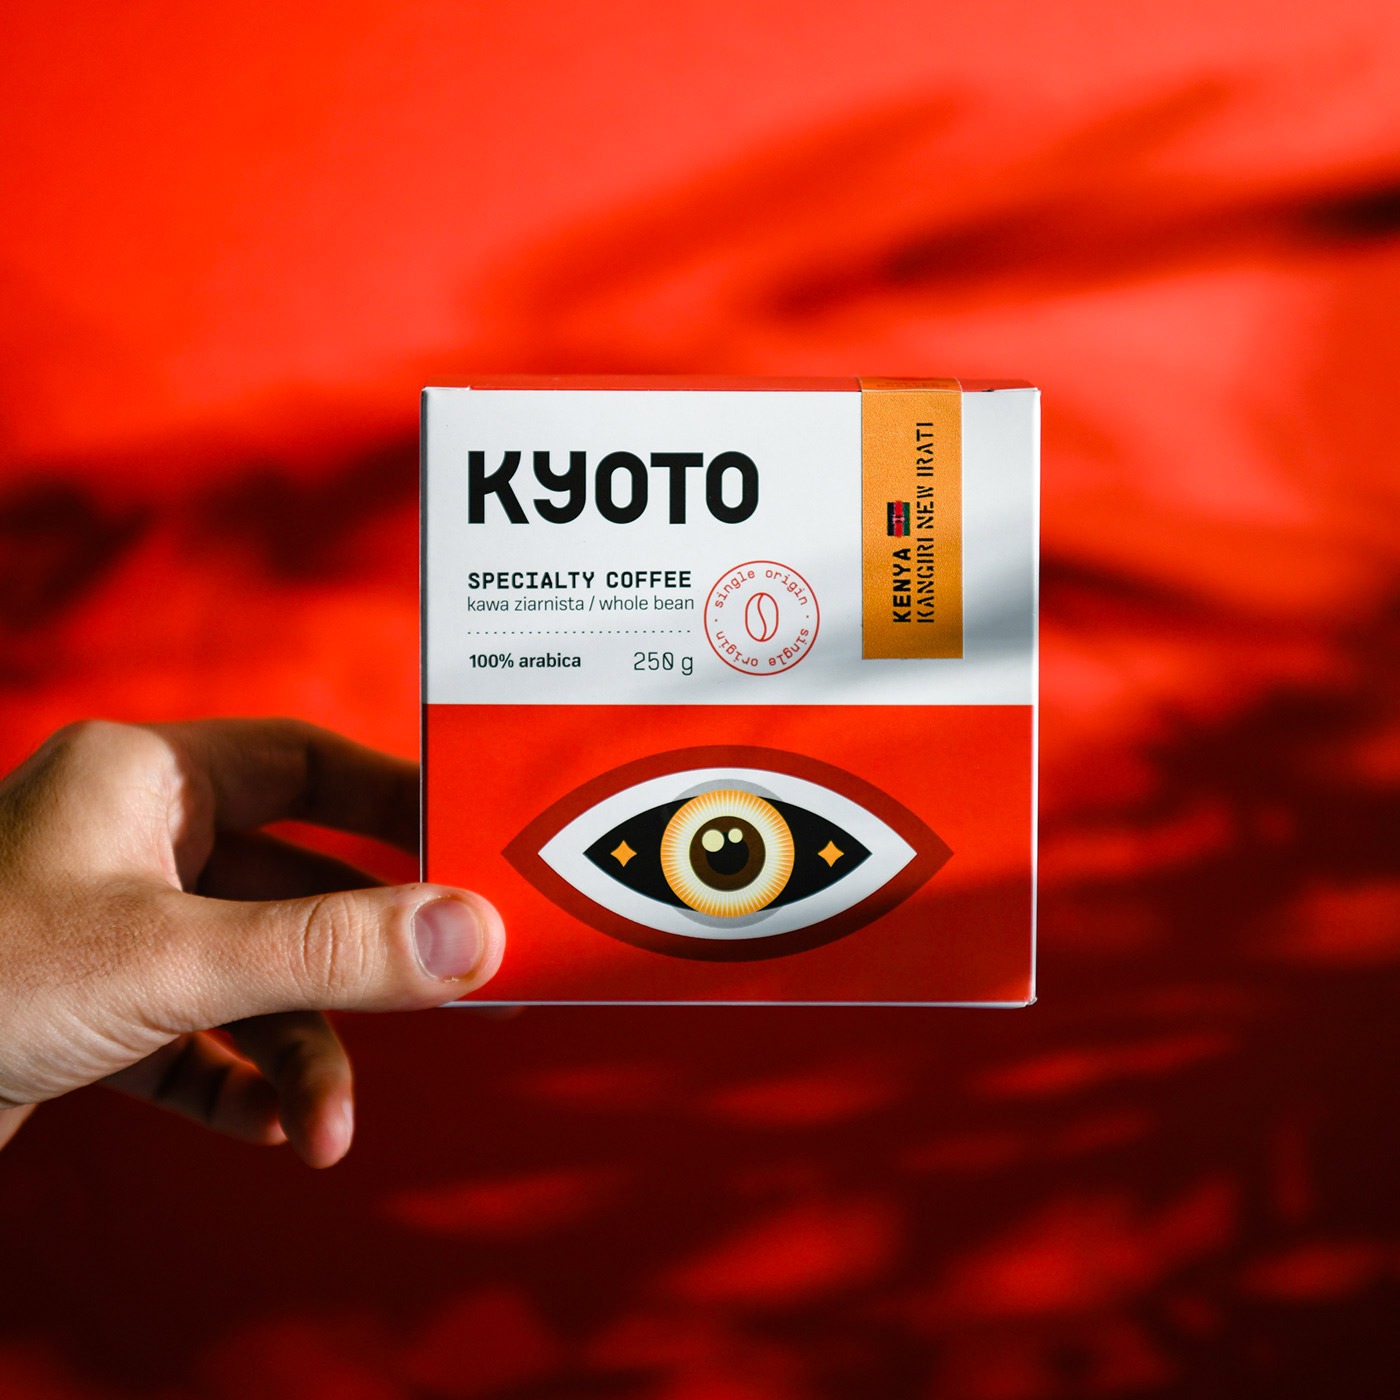 Kyoto冷泡咖啡品牌包装设计